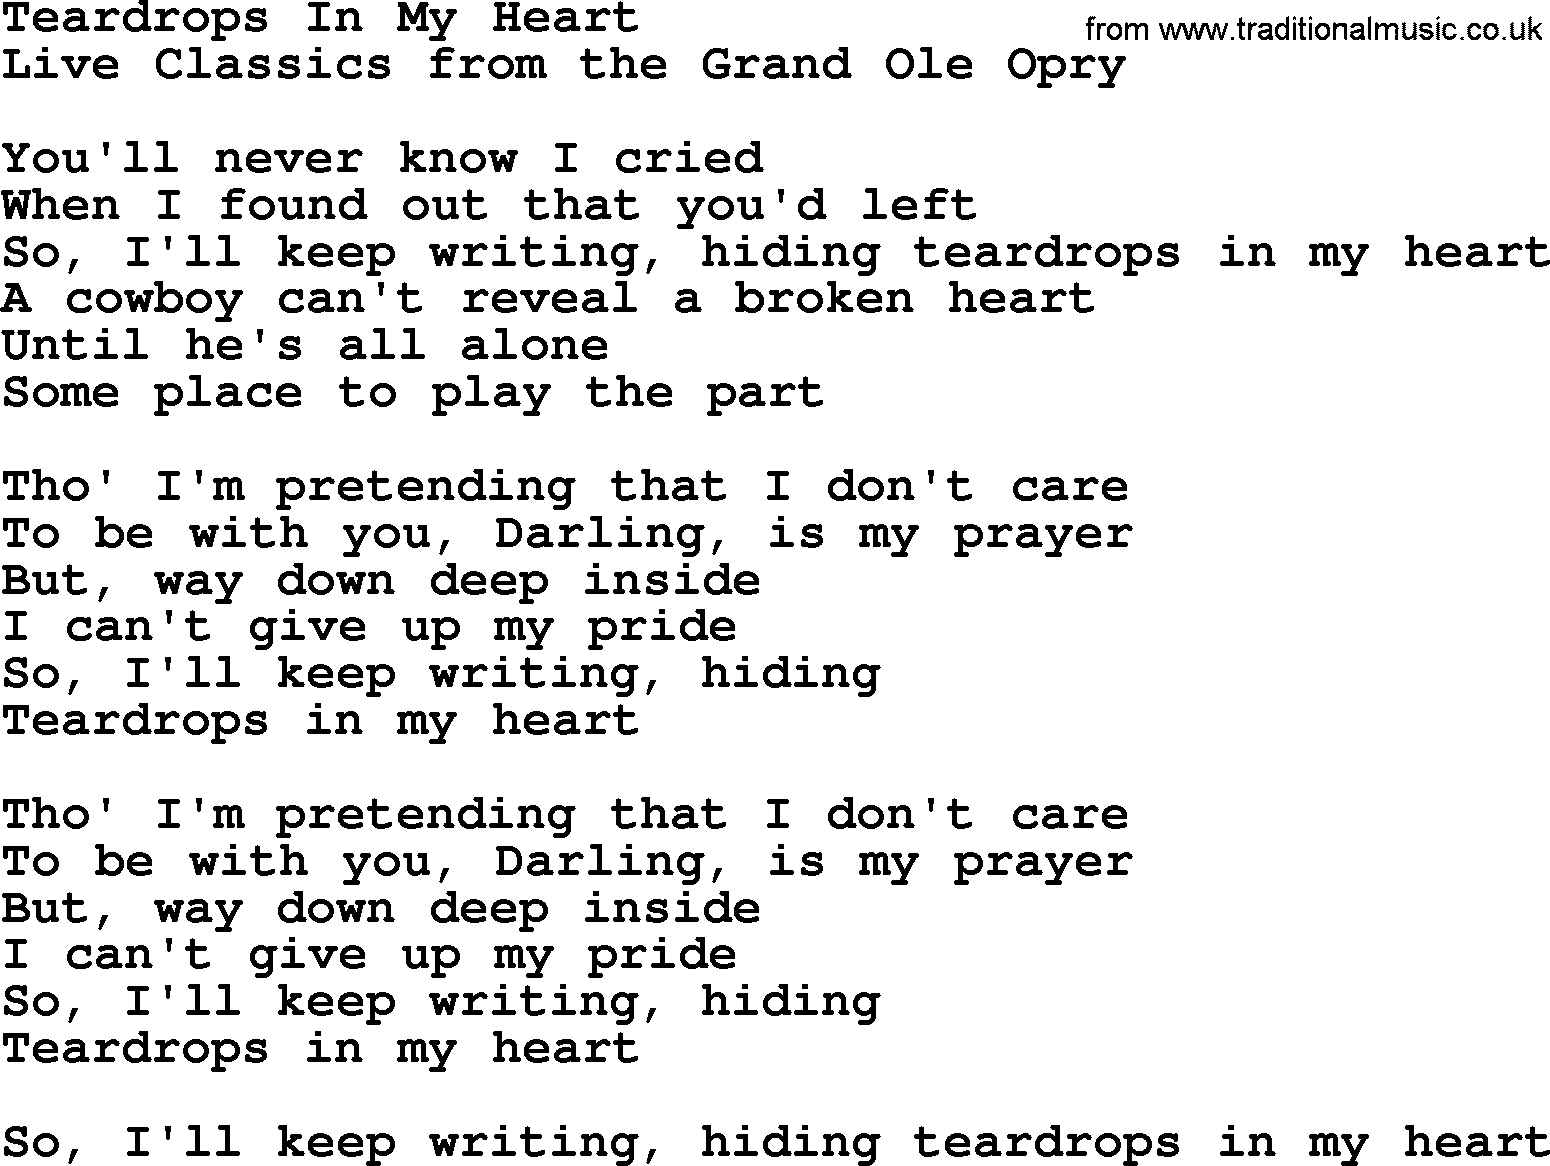 Marty Robbins song: Teardrops In My Heart, lyrics